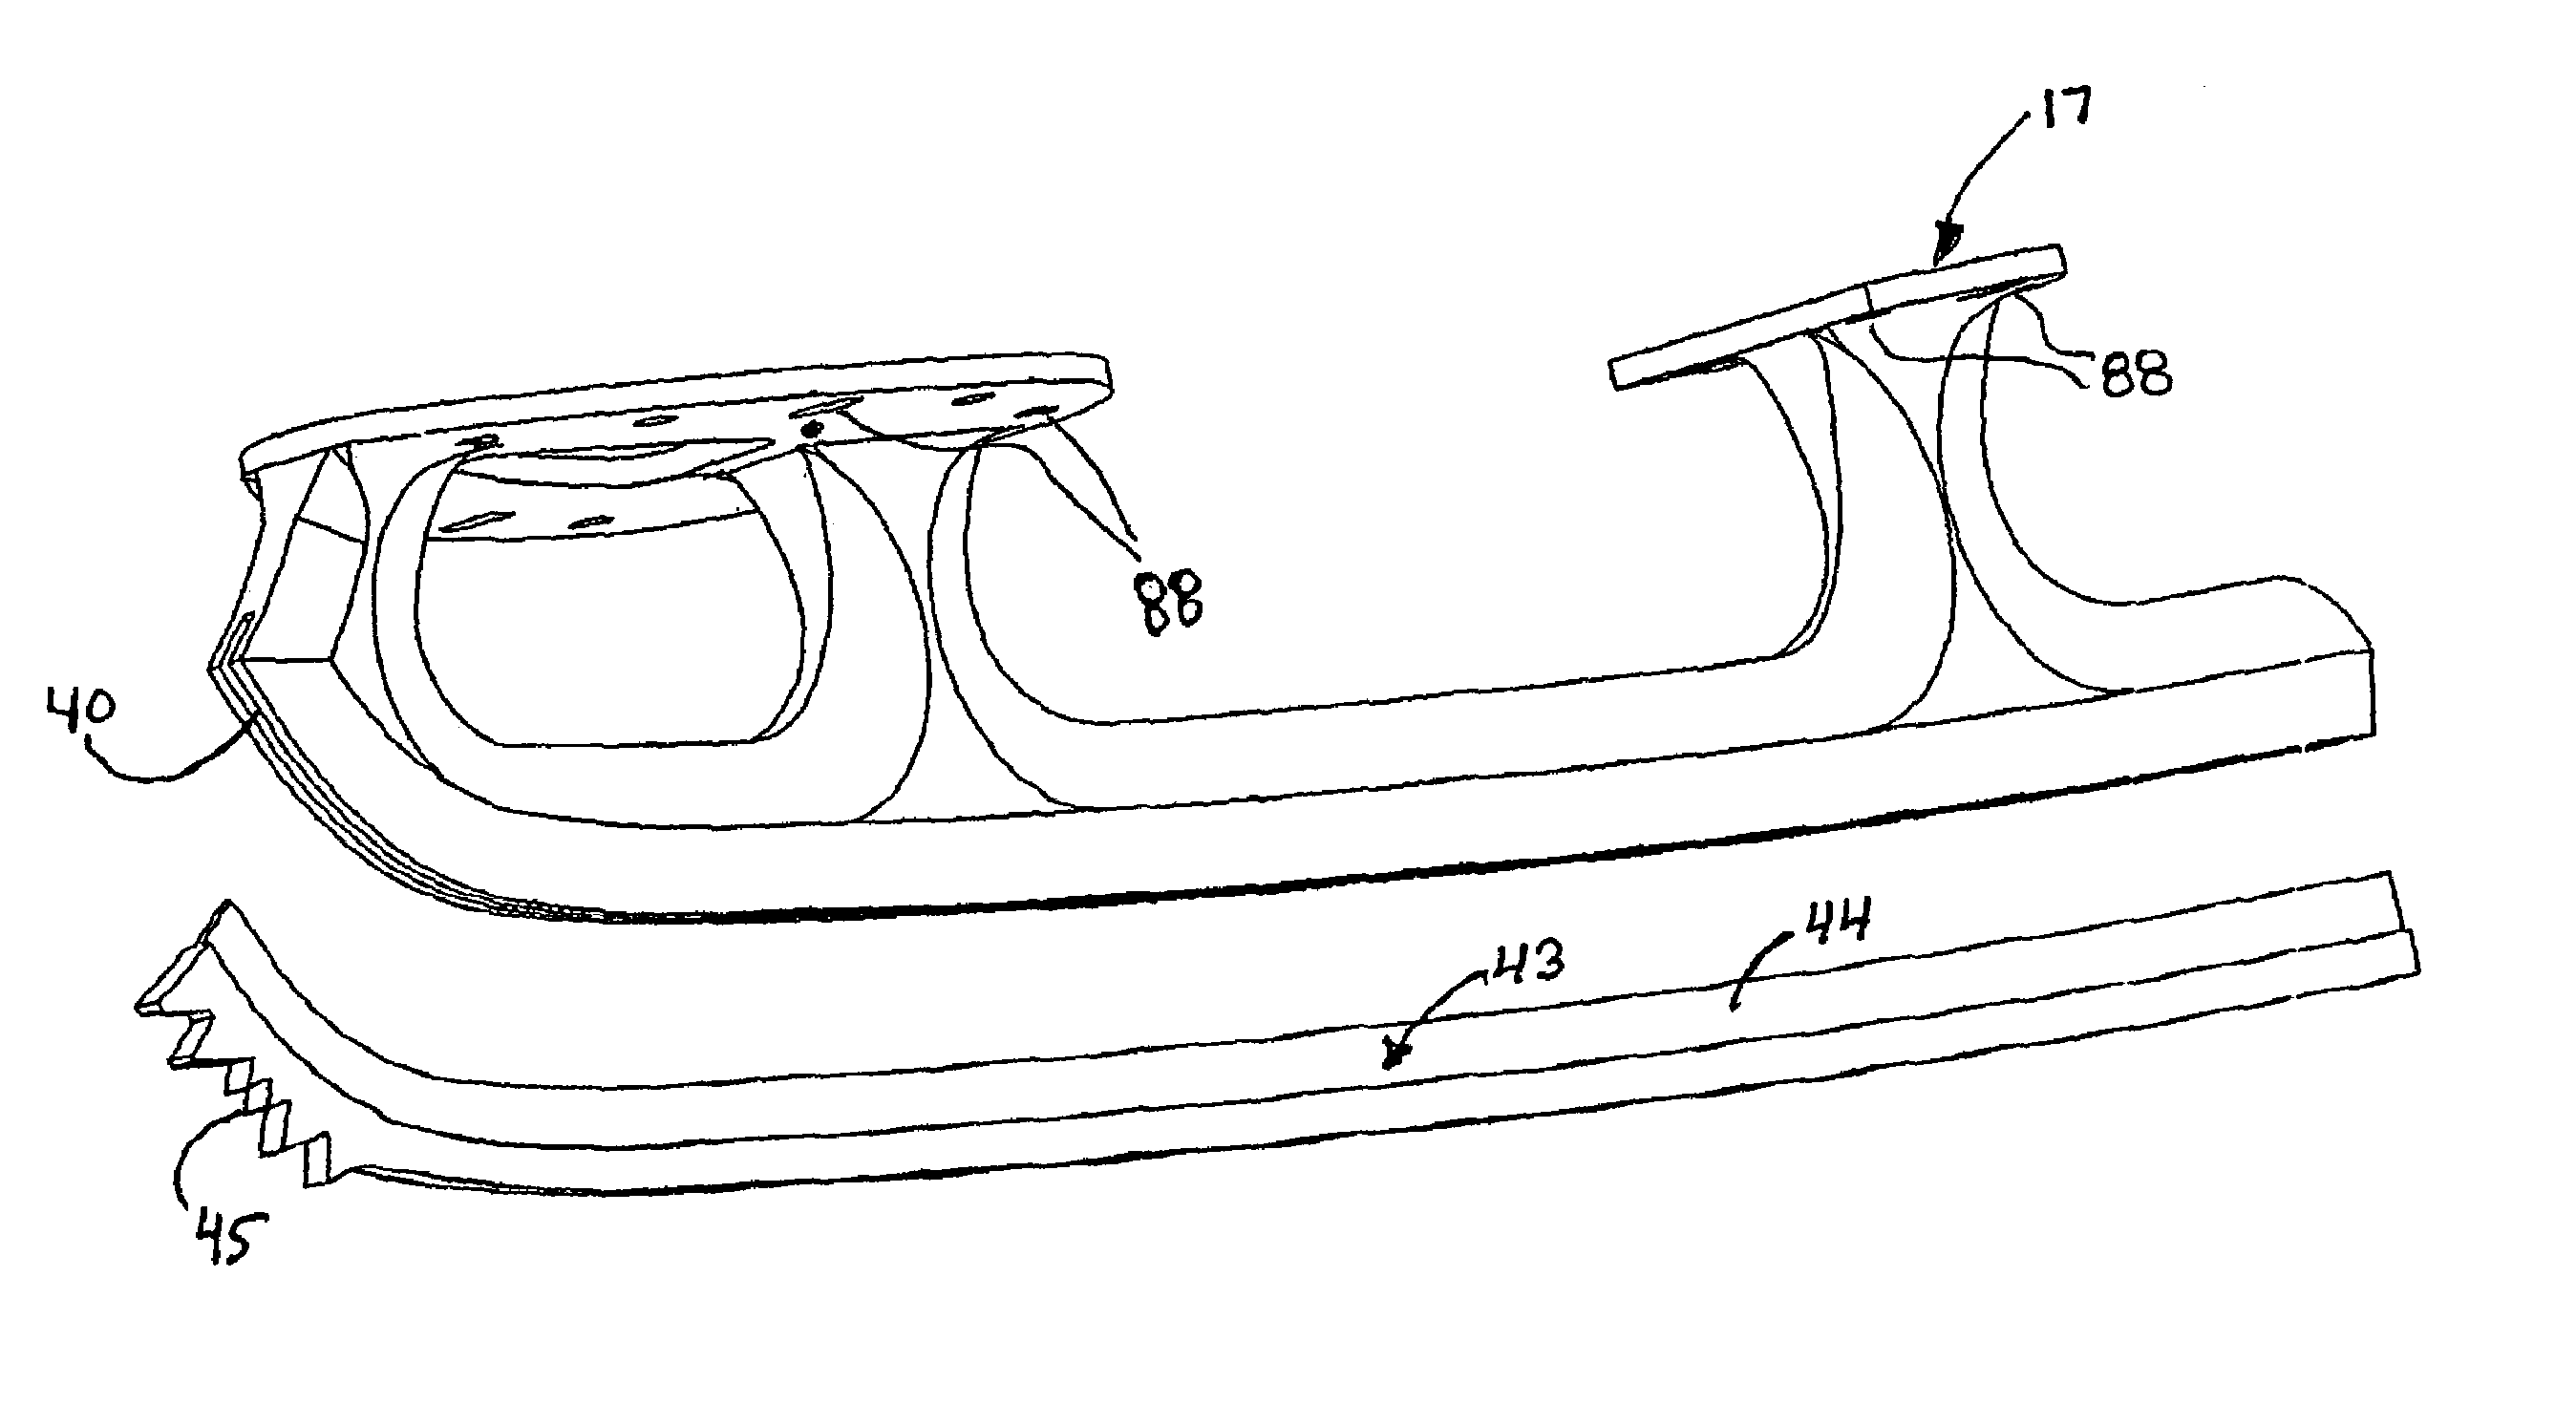 Ice skate blade runner holder and blade runner and method of manufacture